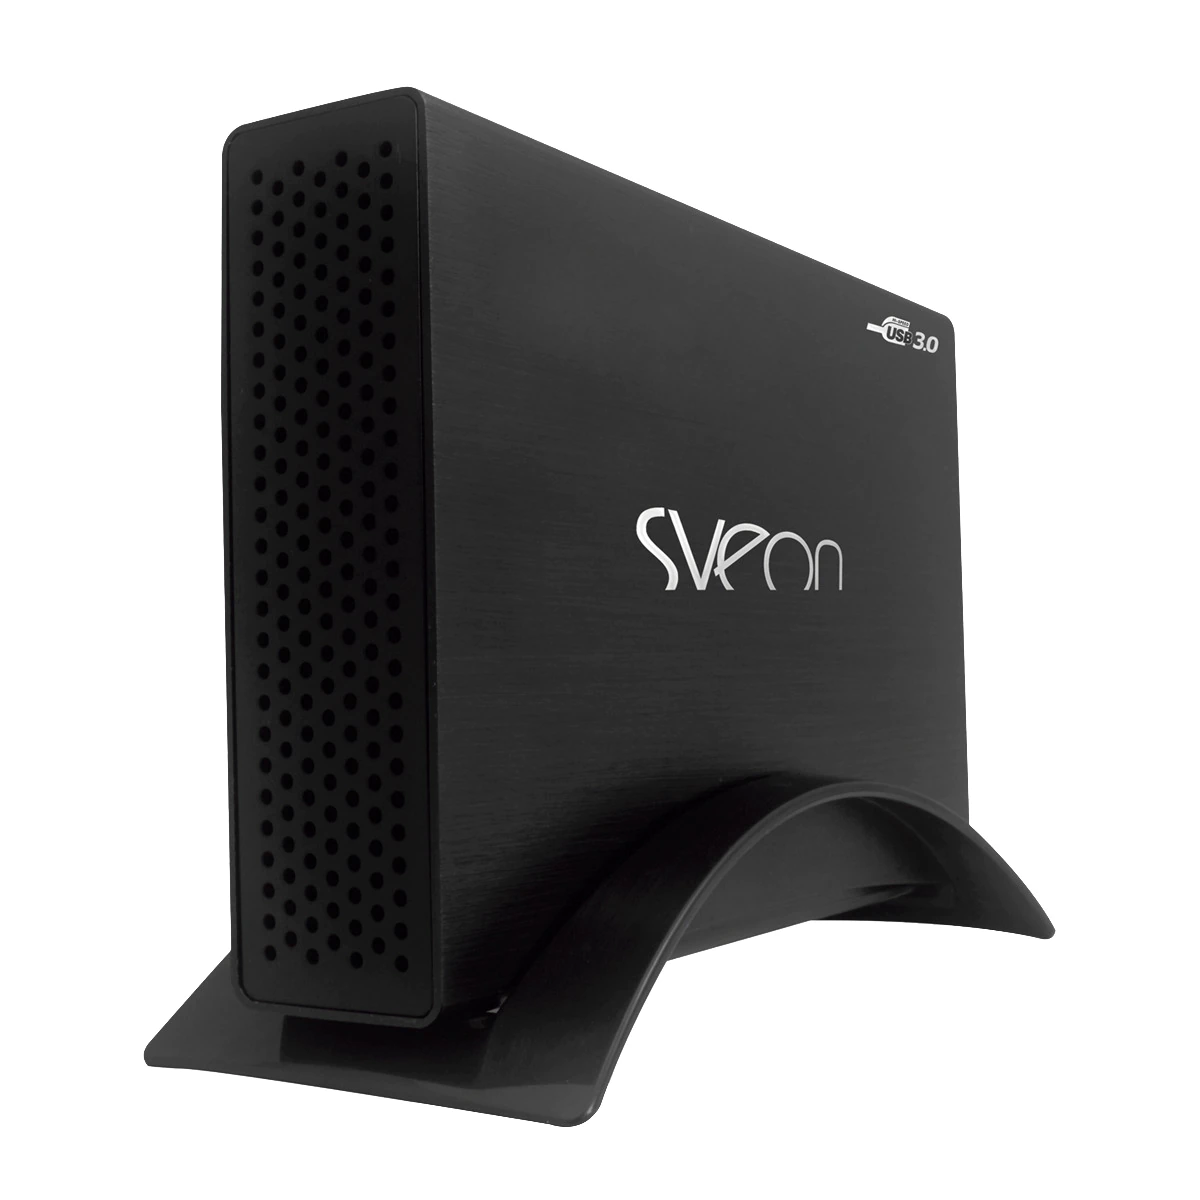 Caja para disco duro SATA de 8,89 cm (3,5») Sveon STG310 USB 3.0